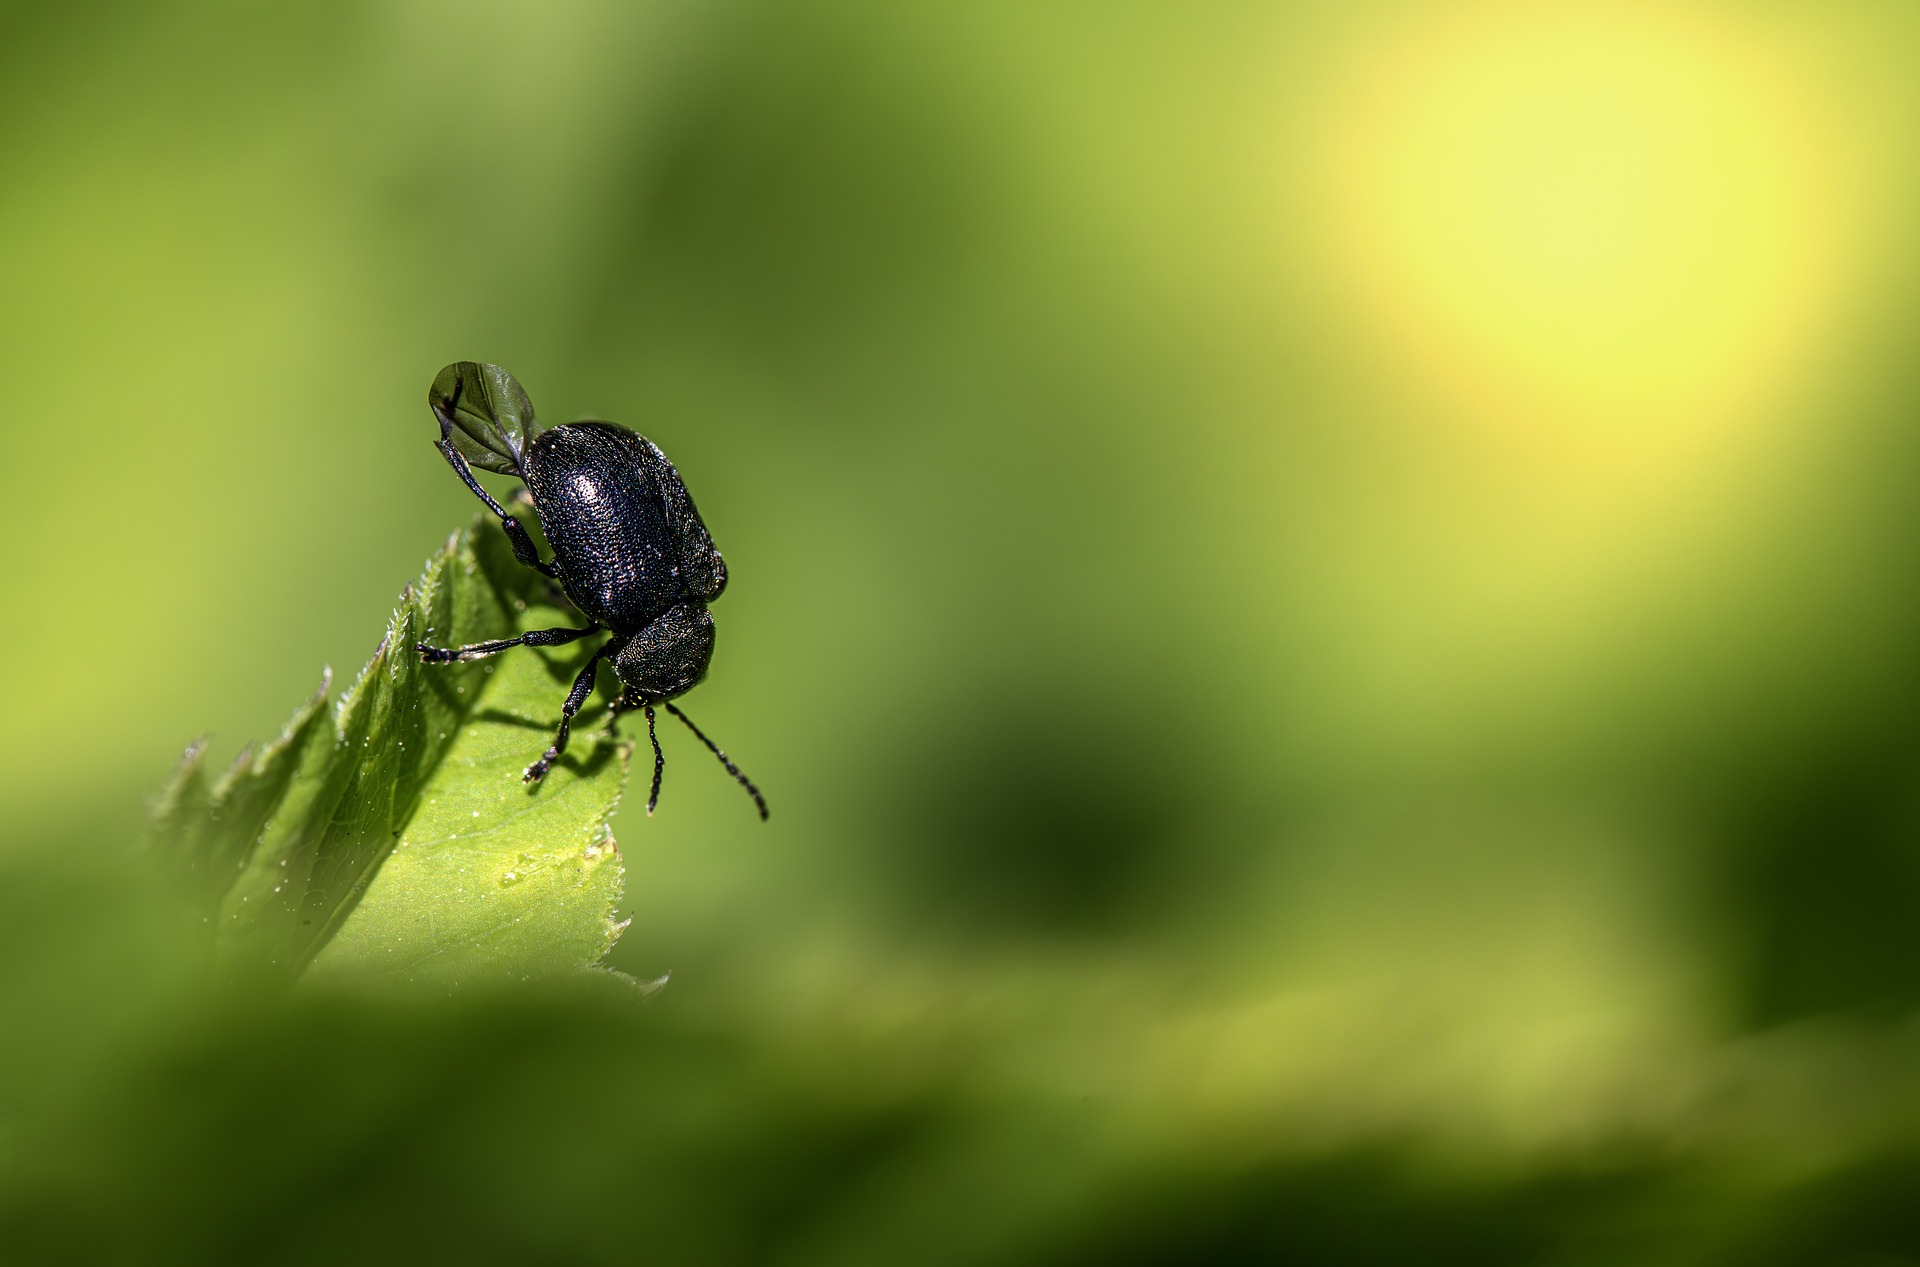 Black Beetle, Bug